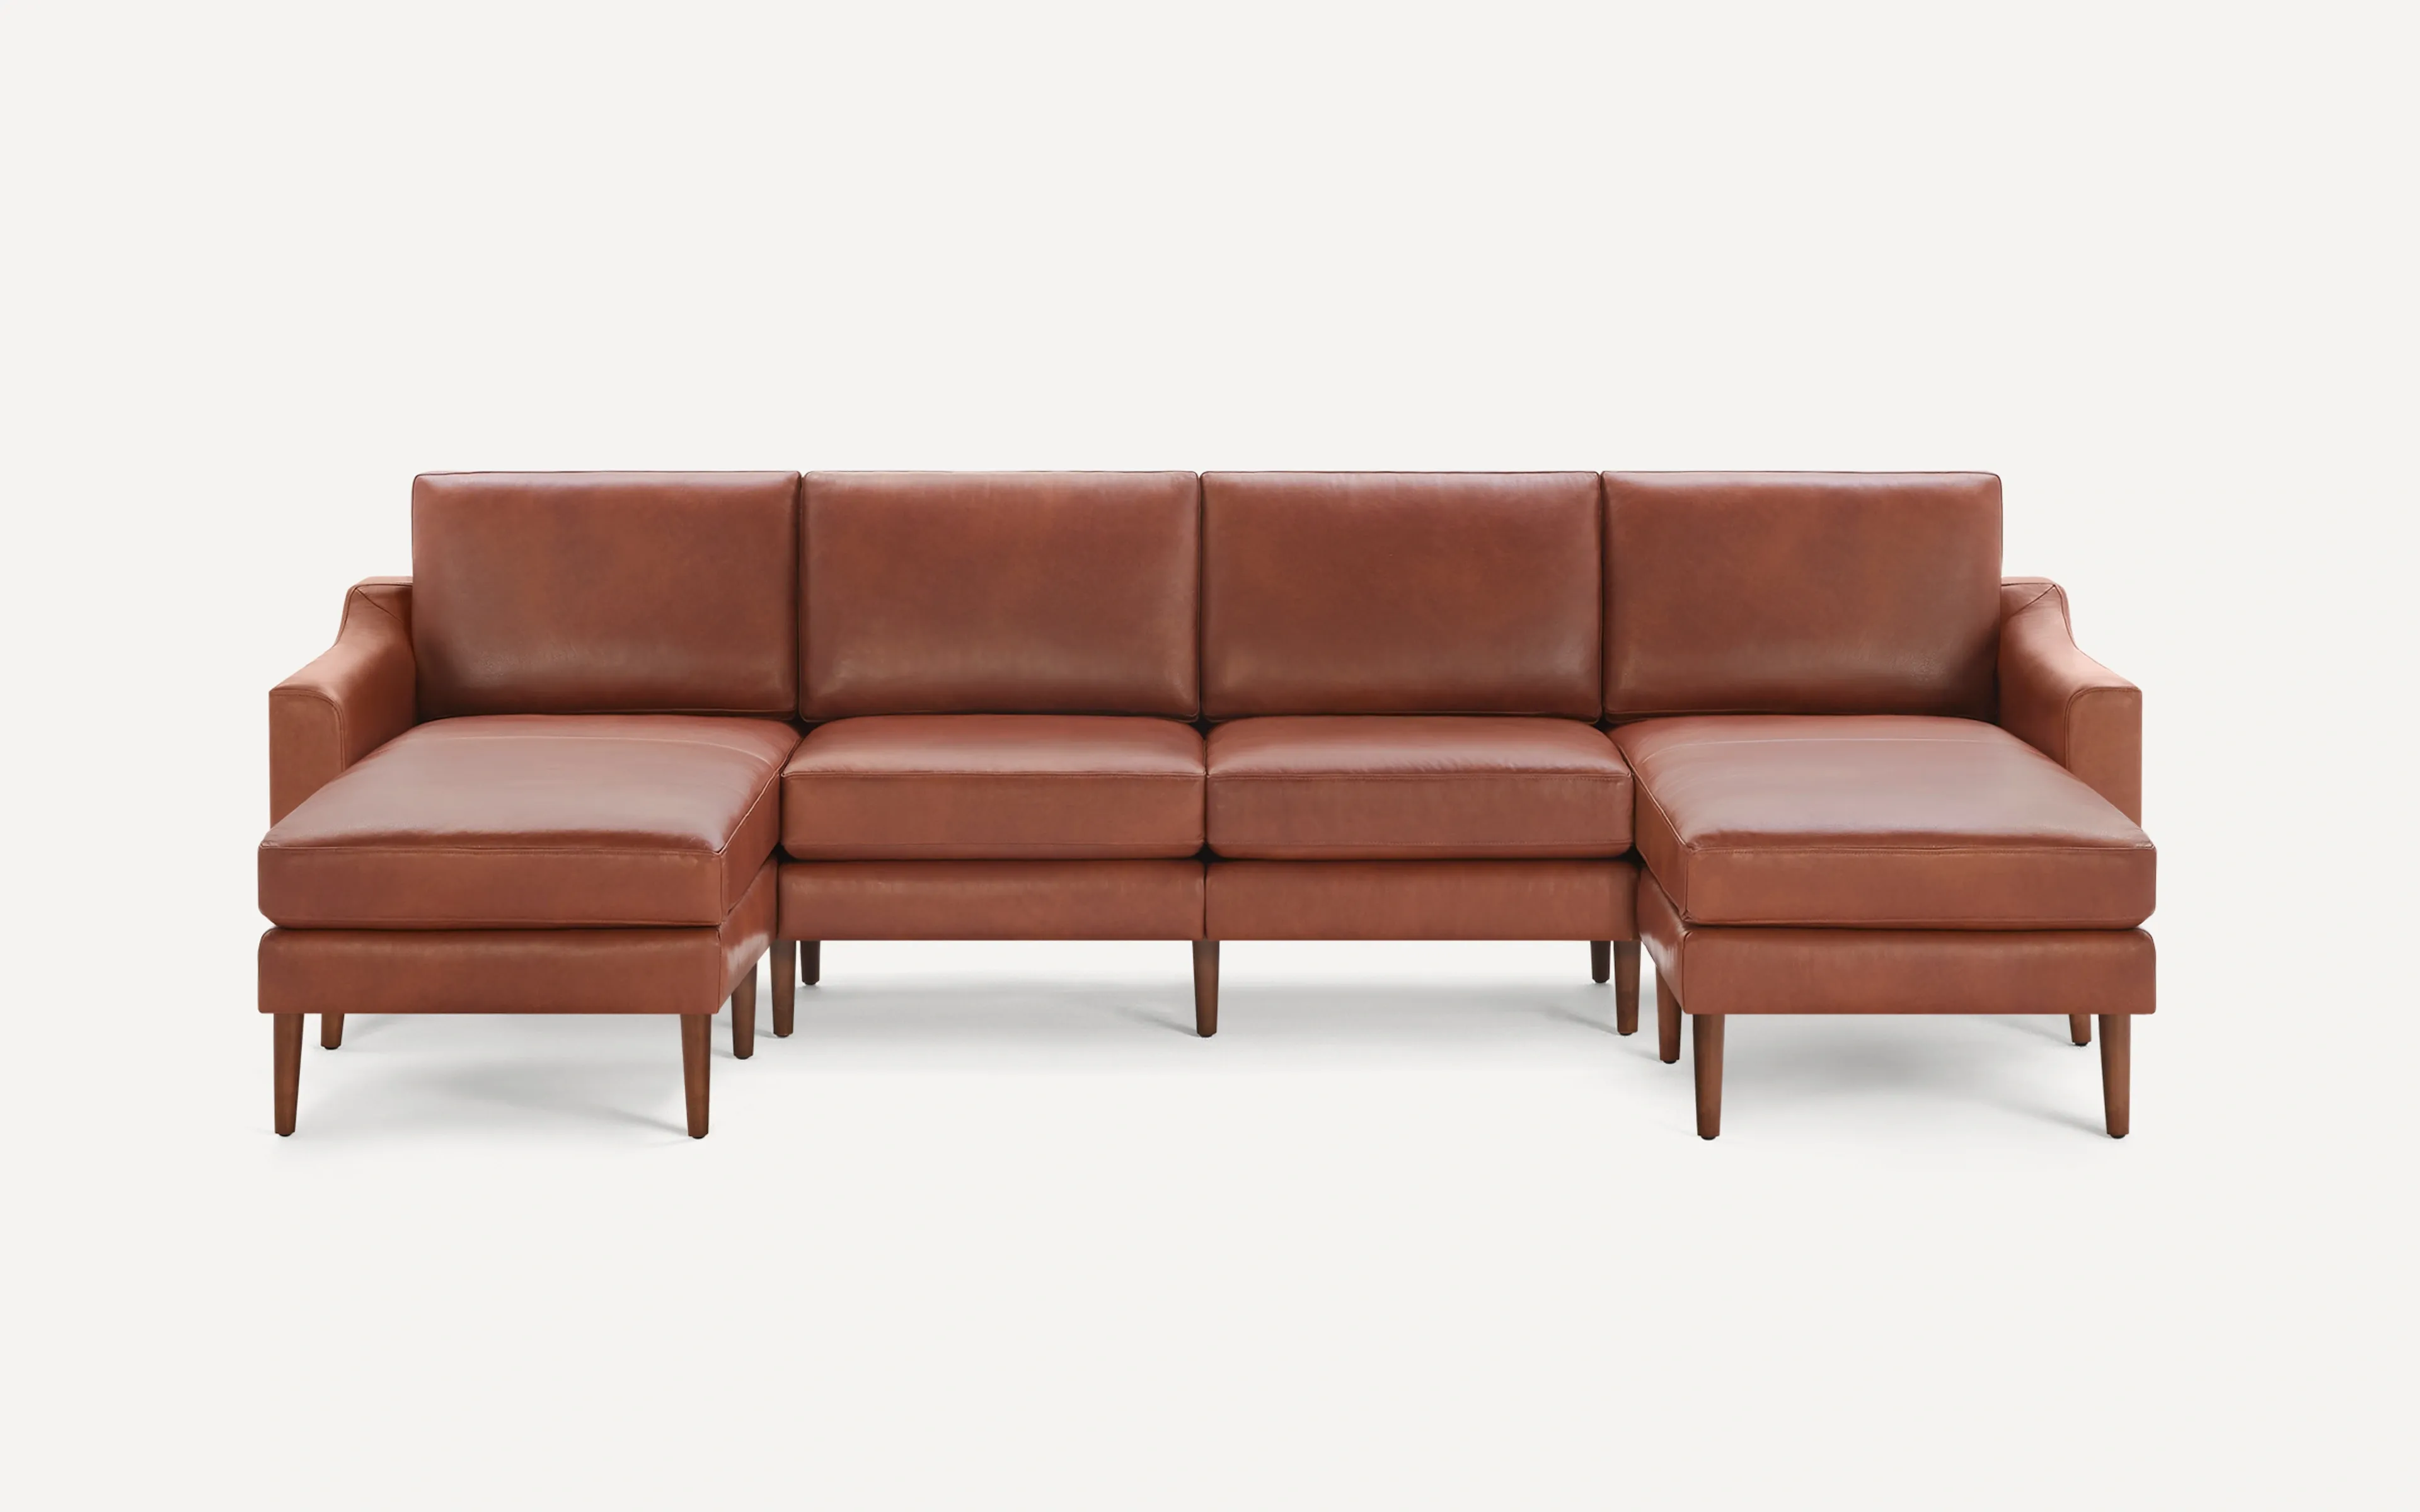 Original King Sofa in Chestnut Leather